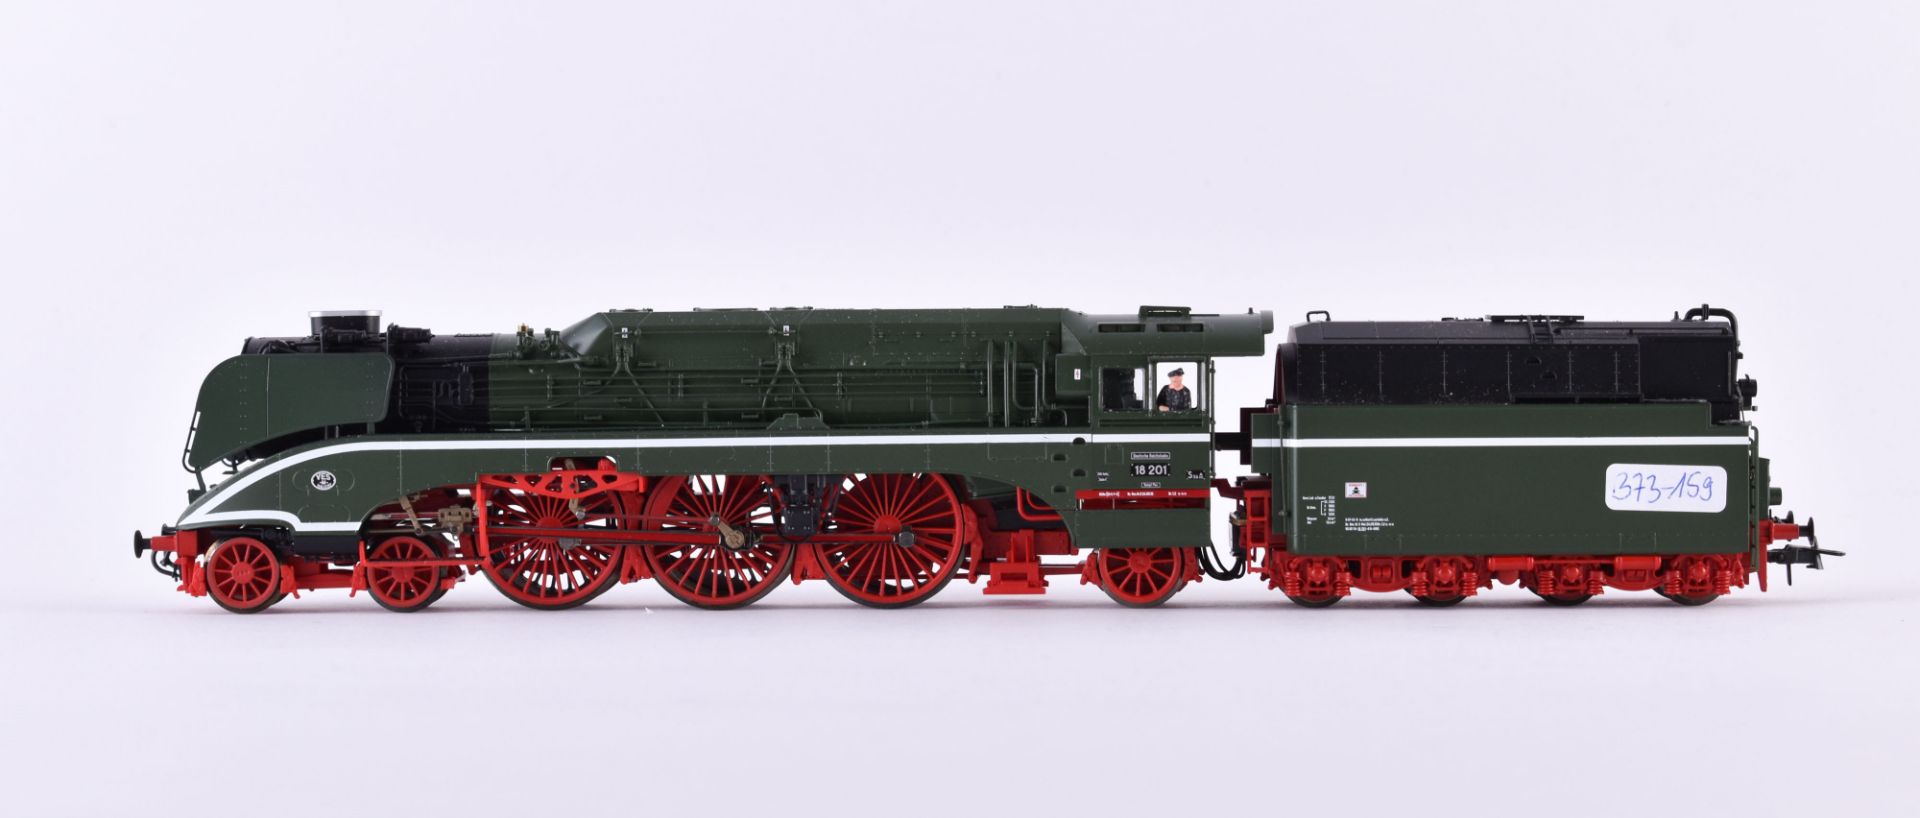 Steam locomotive 18 201 DR - Roco - Image 2 of 3